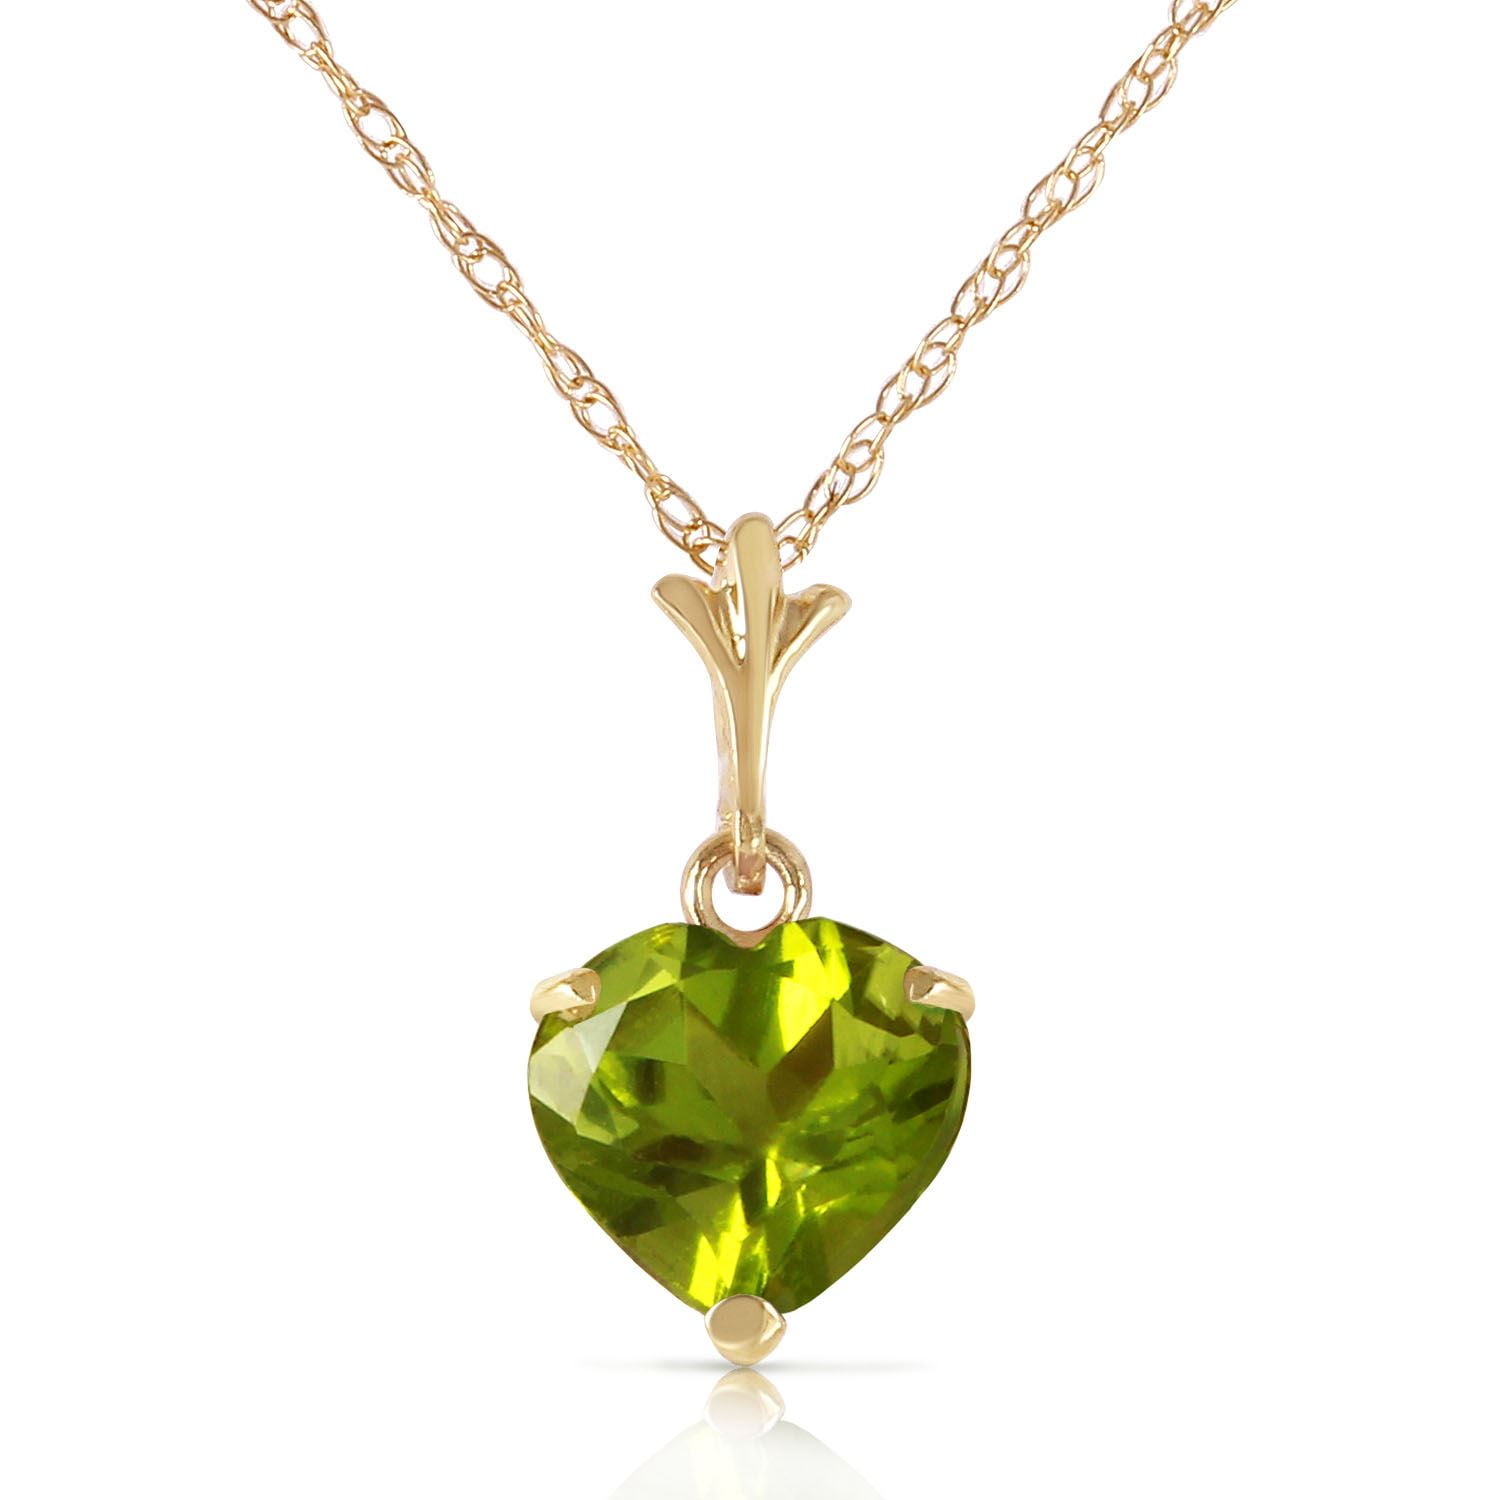 ALARRI 5.25 Carat 14K Solid Rose Gold Necklace Peridot Pearl